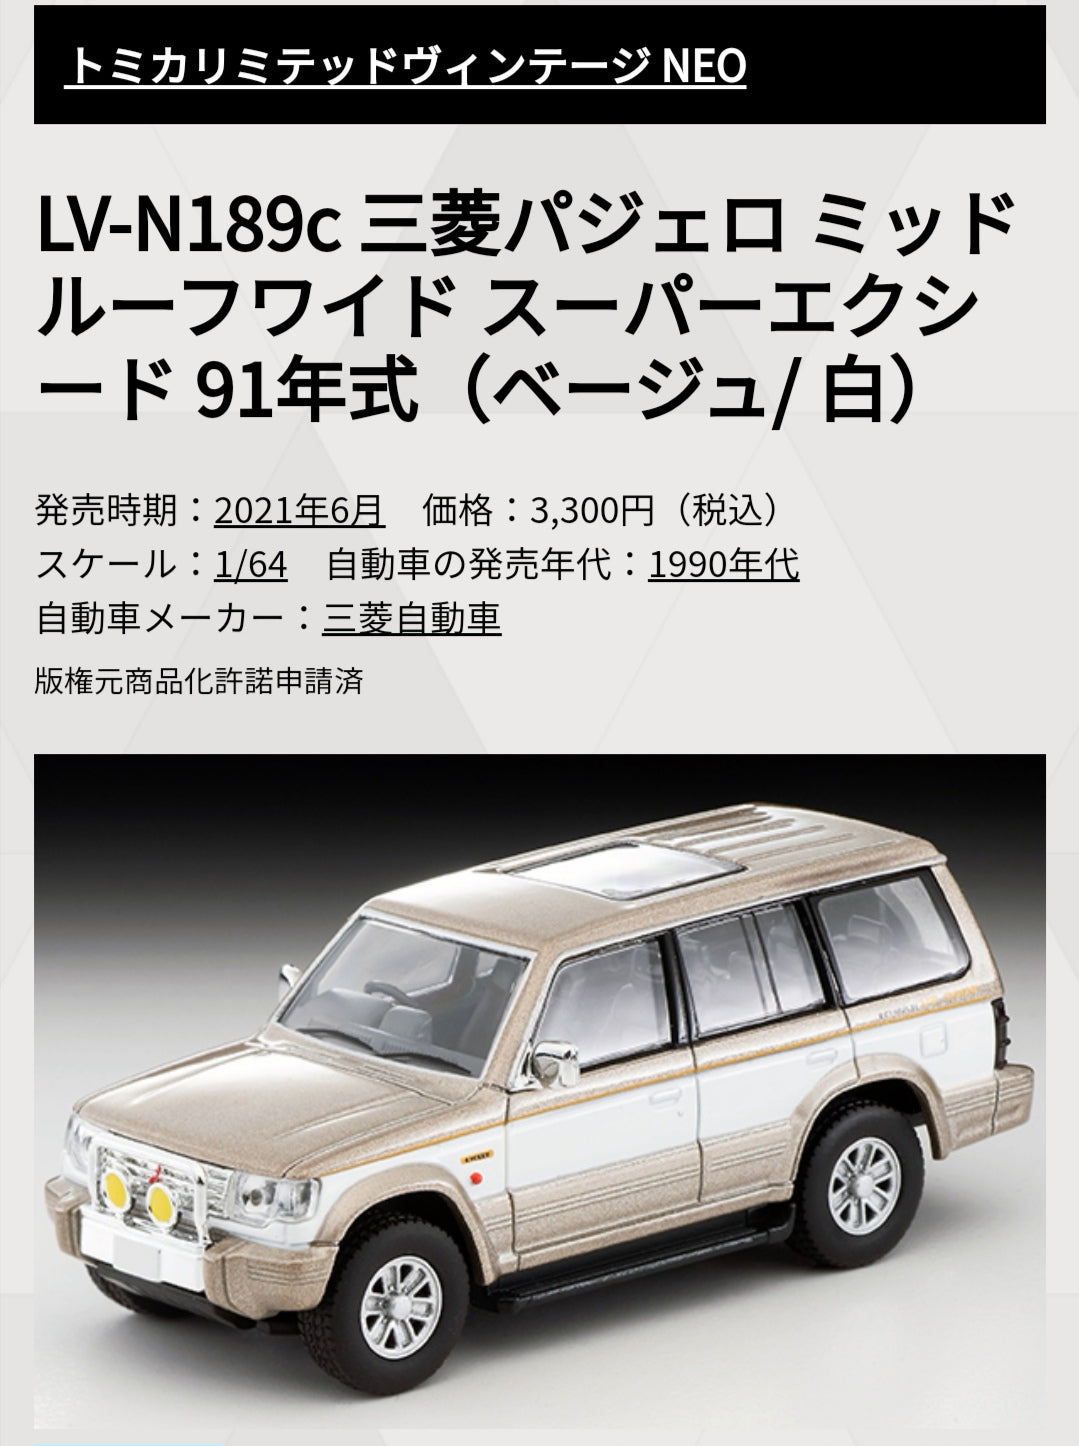 Tomytec Limited Vintage Neo LV-N189c Mitsubishi Pajero Super Exceed (Beige/White)